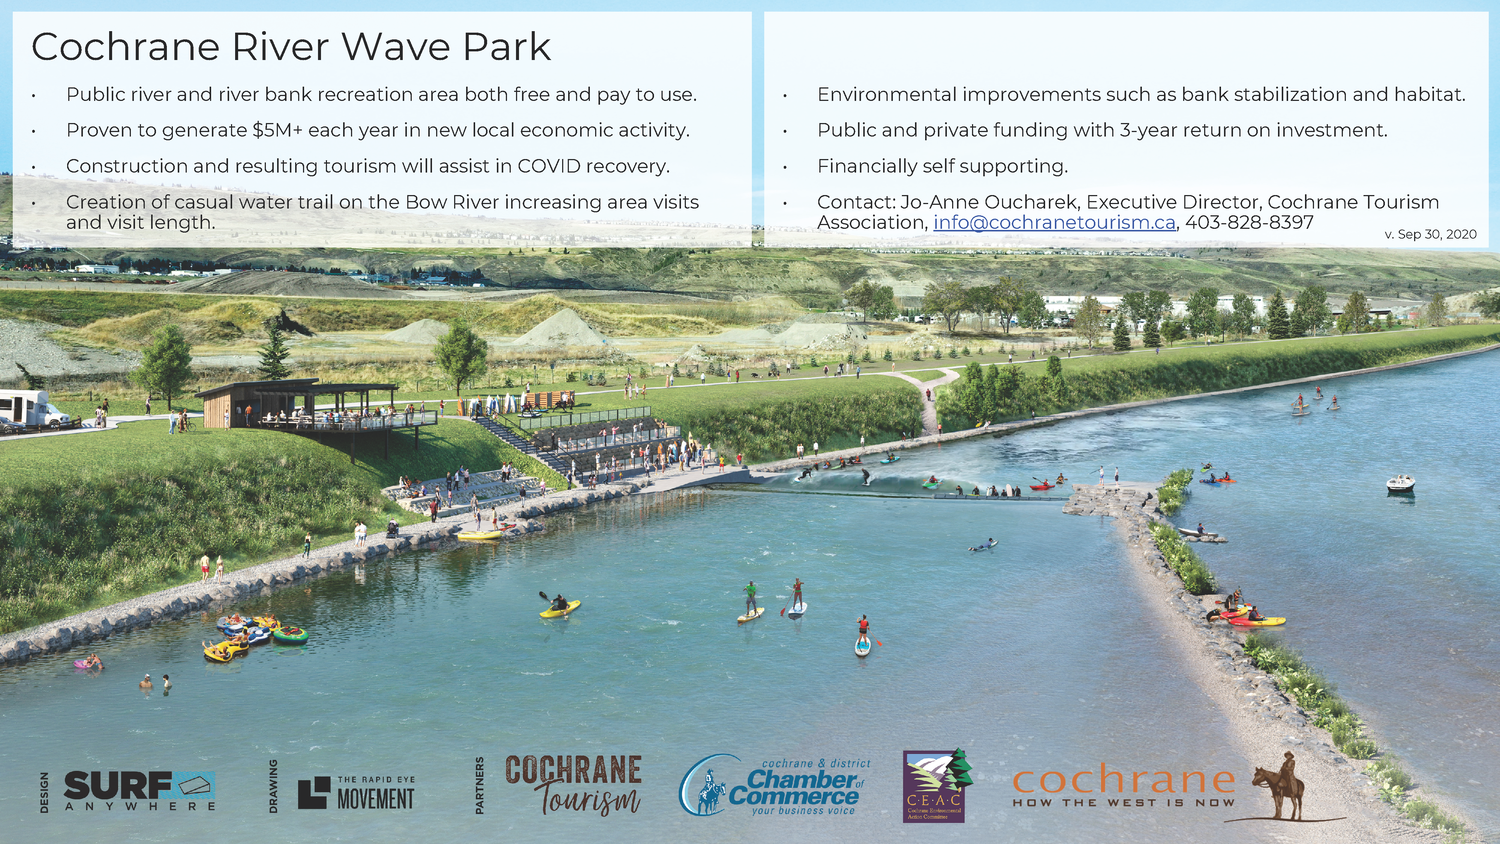 Cochrane+River+Wave+Park+Overview+2020+09+30_Page_1.png